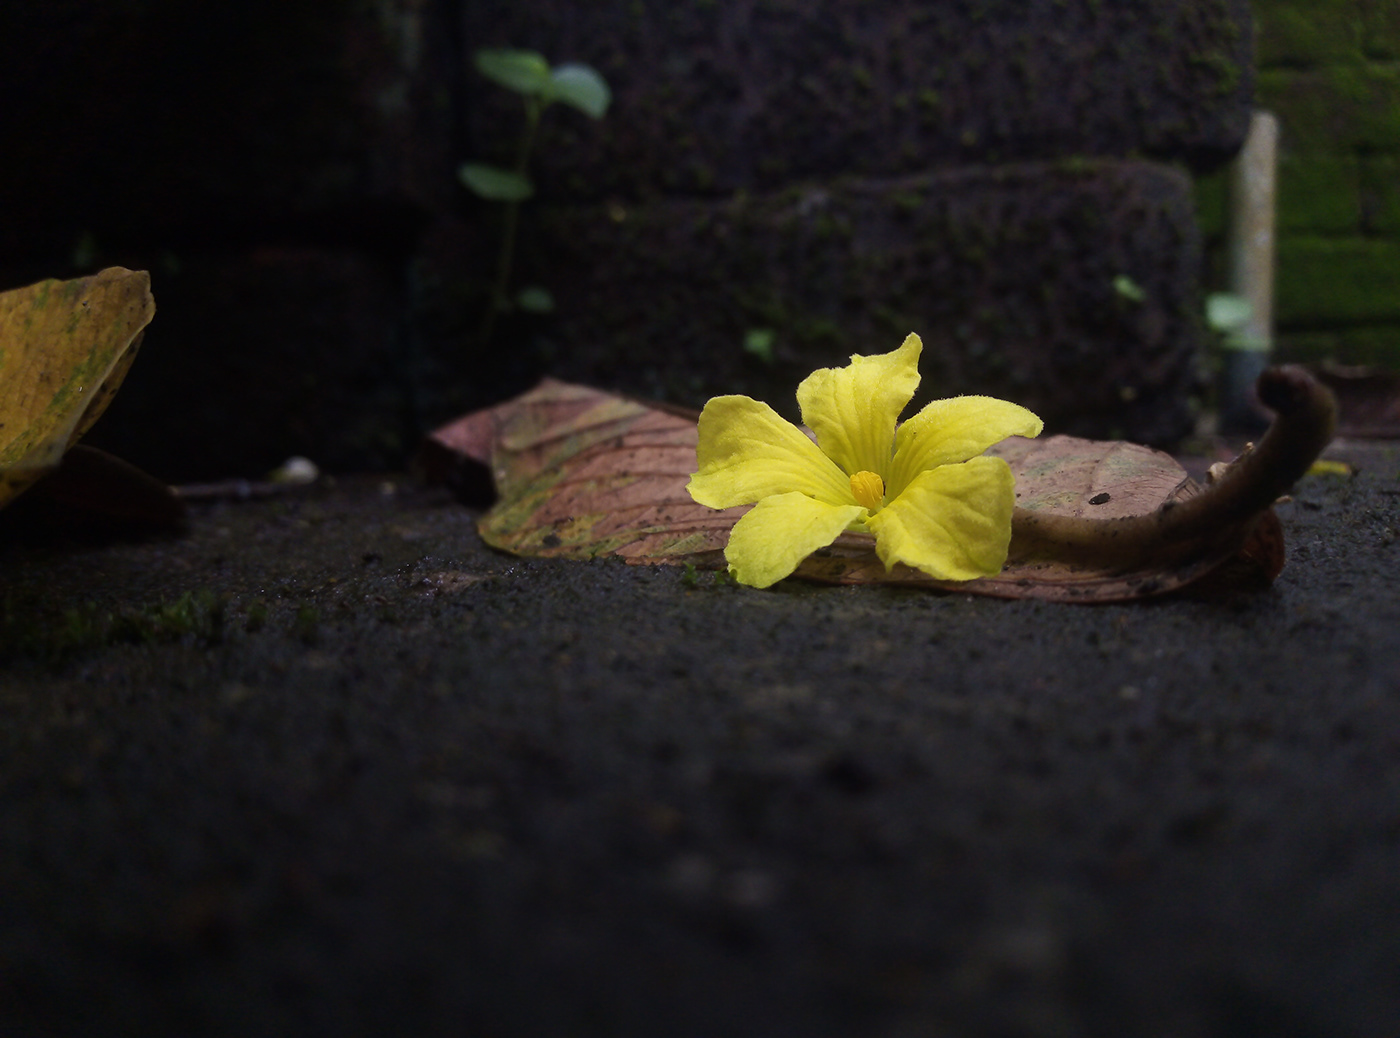 another hope broken flower hope for new days